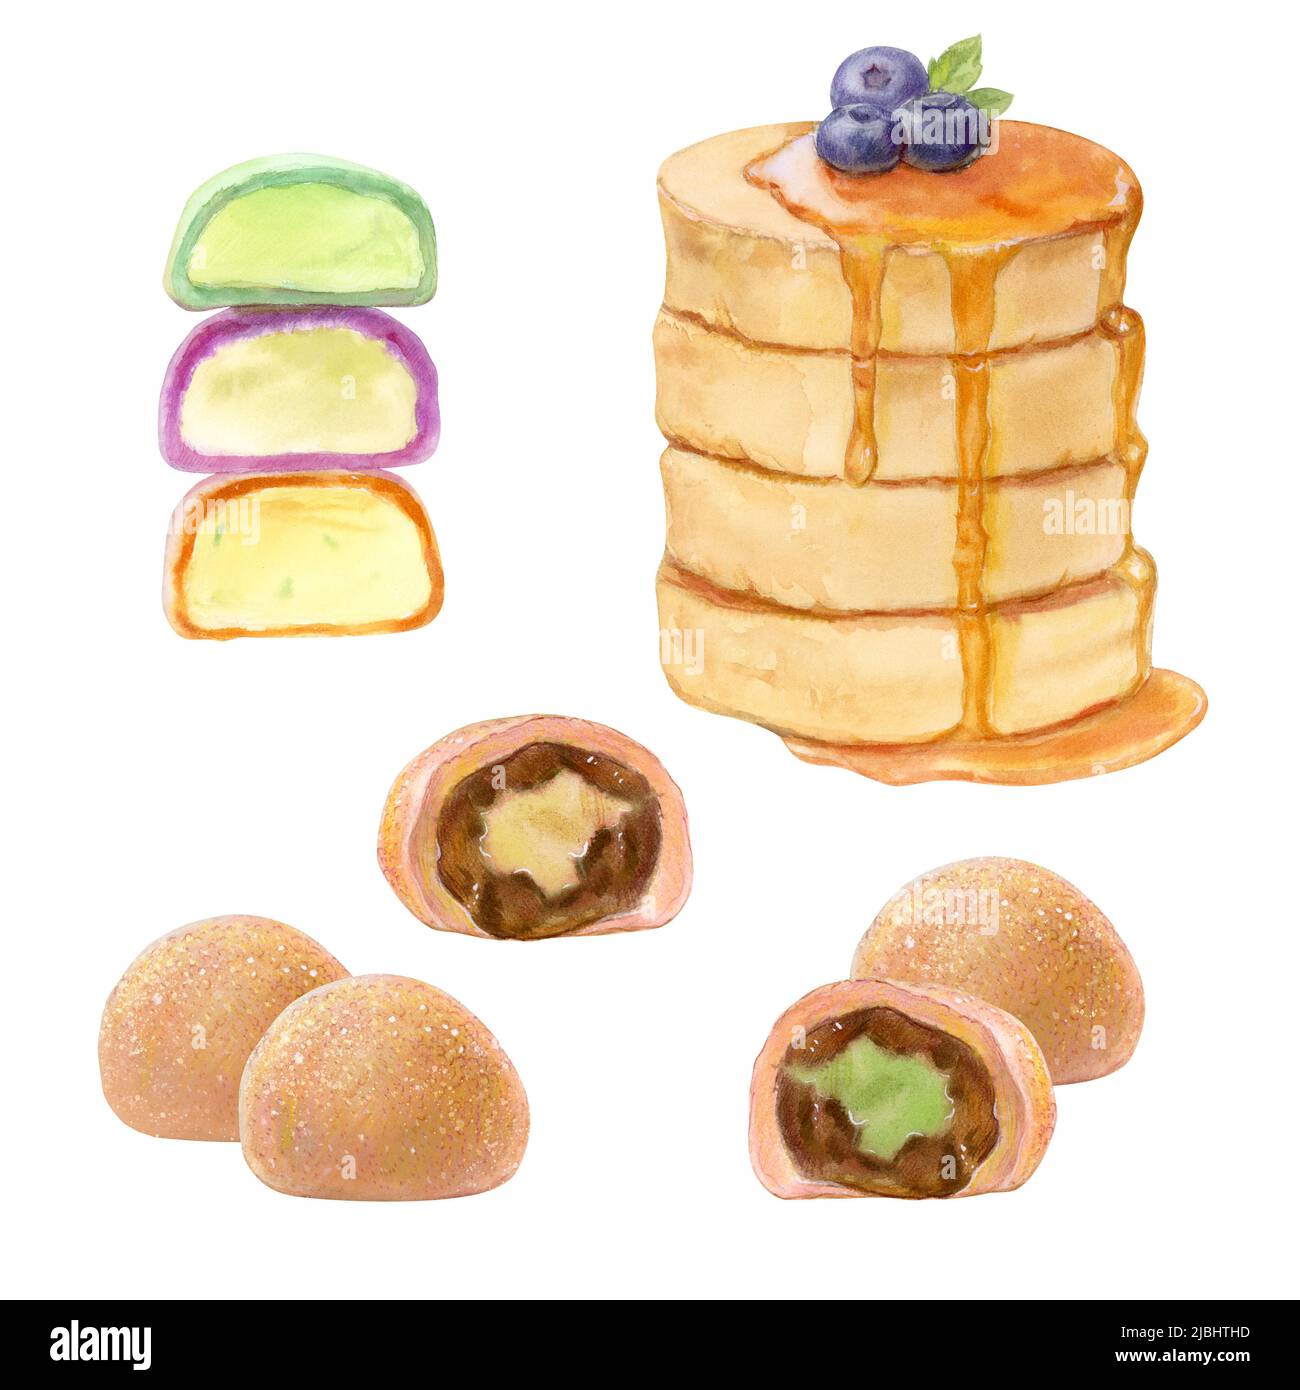 Food dessert, souffle pancakes, daifuku, watercolor illustration isolated on white background Stock Photo